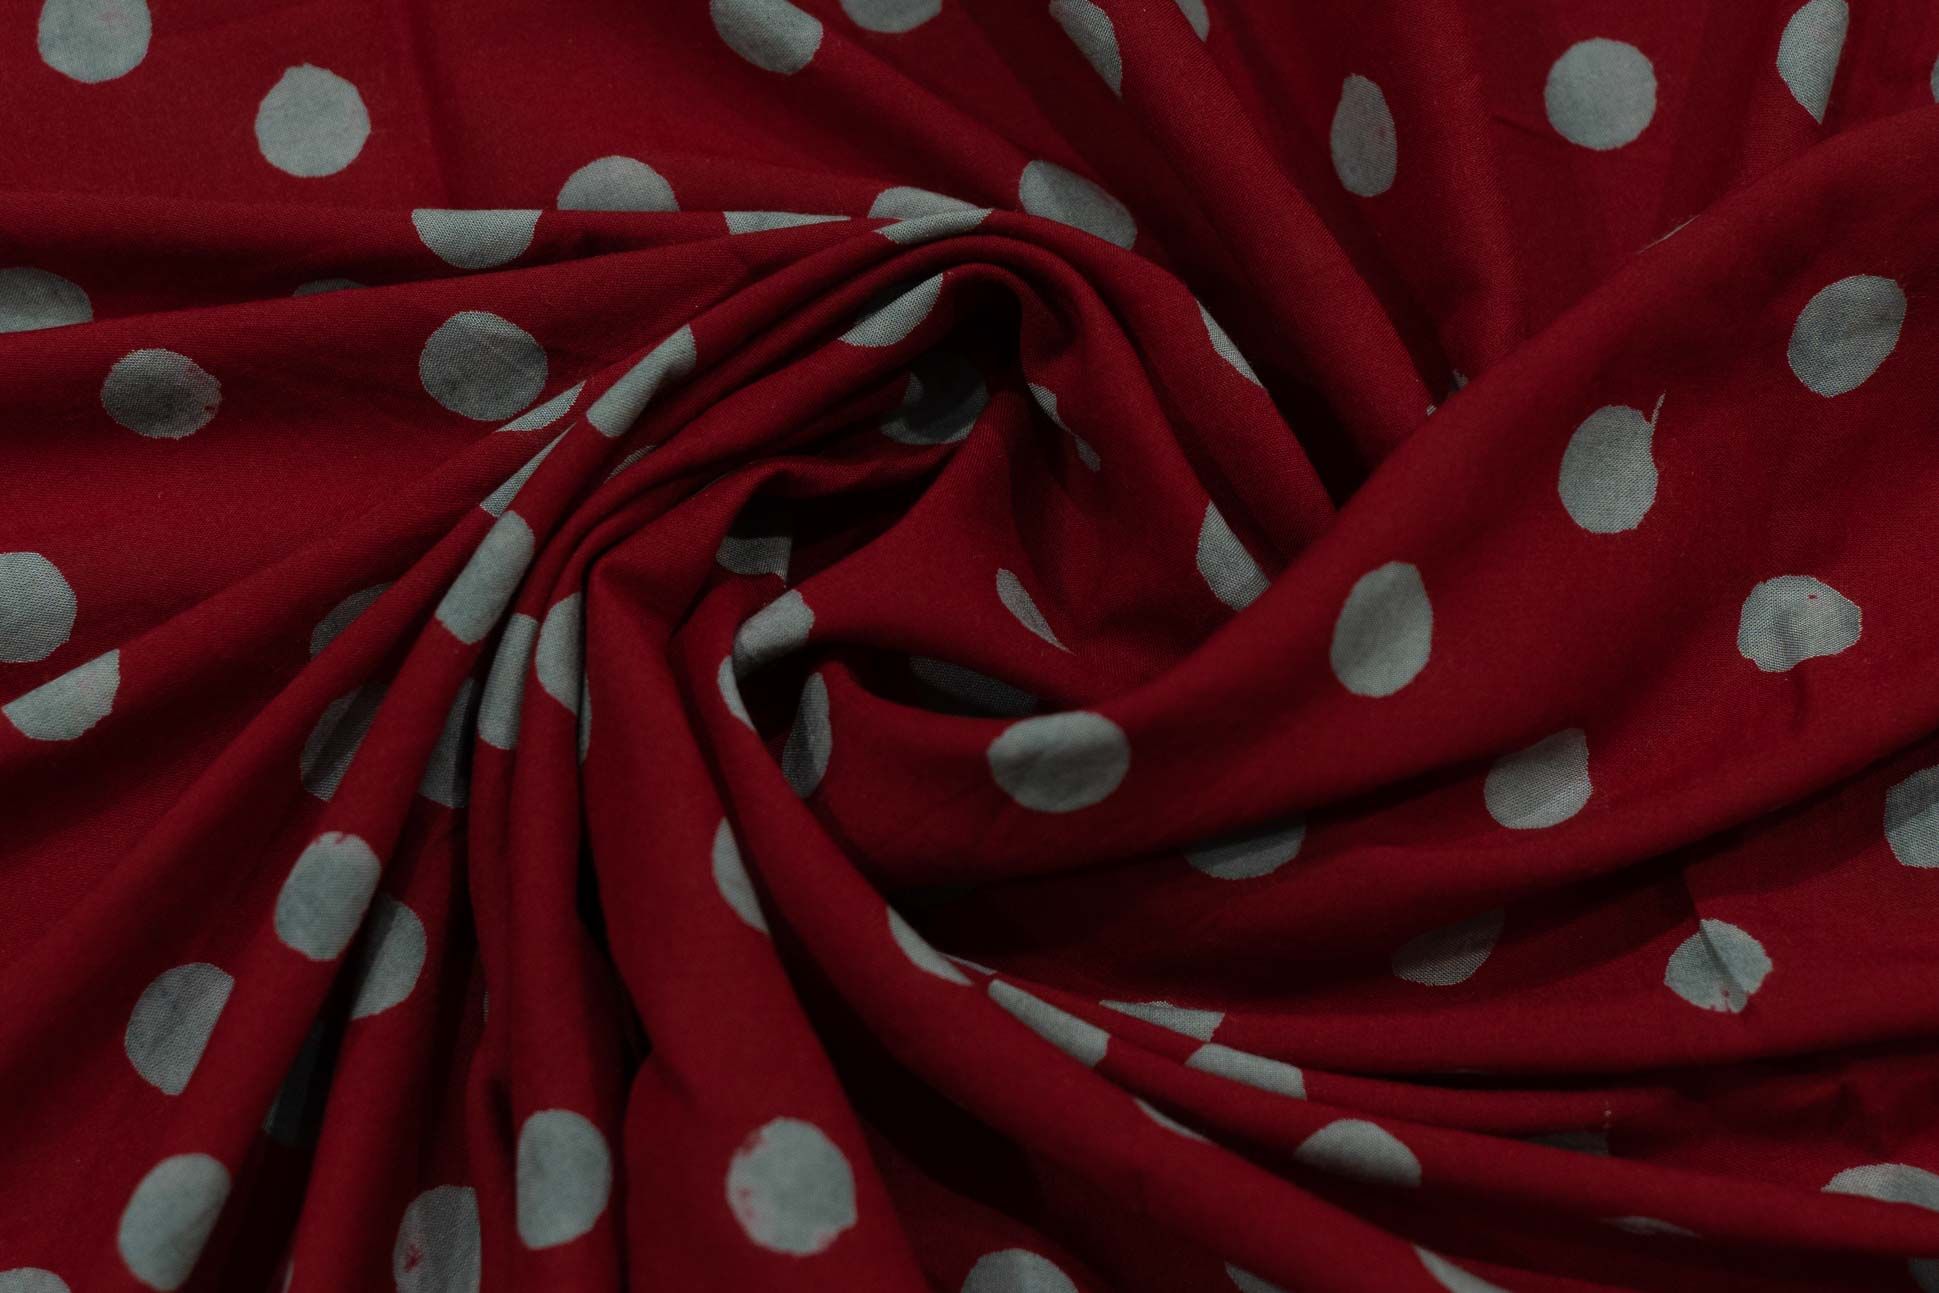  Red Polka Dot Block Print Modal Fabric